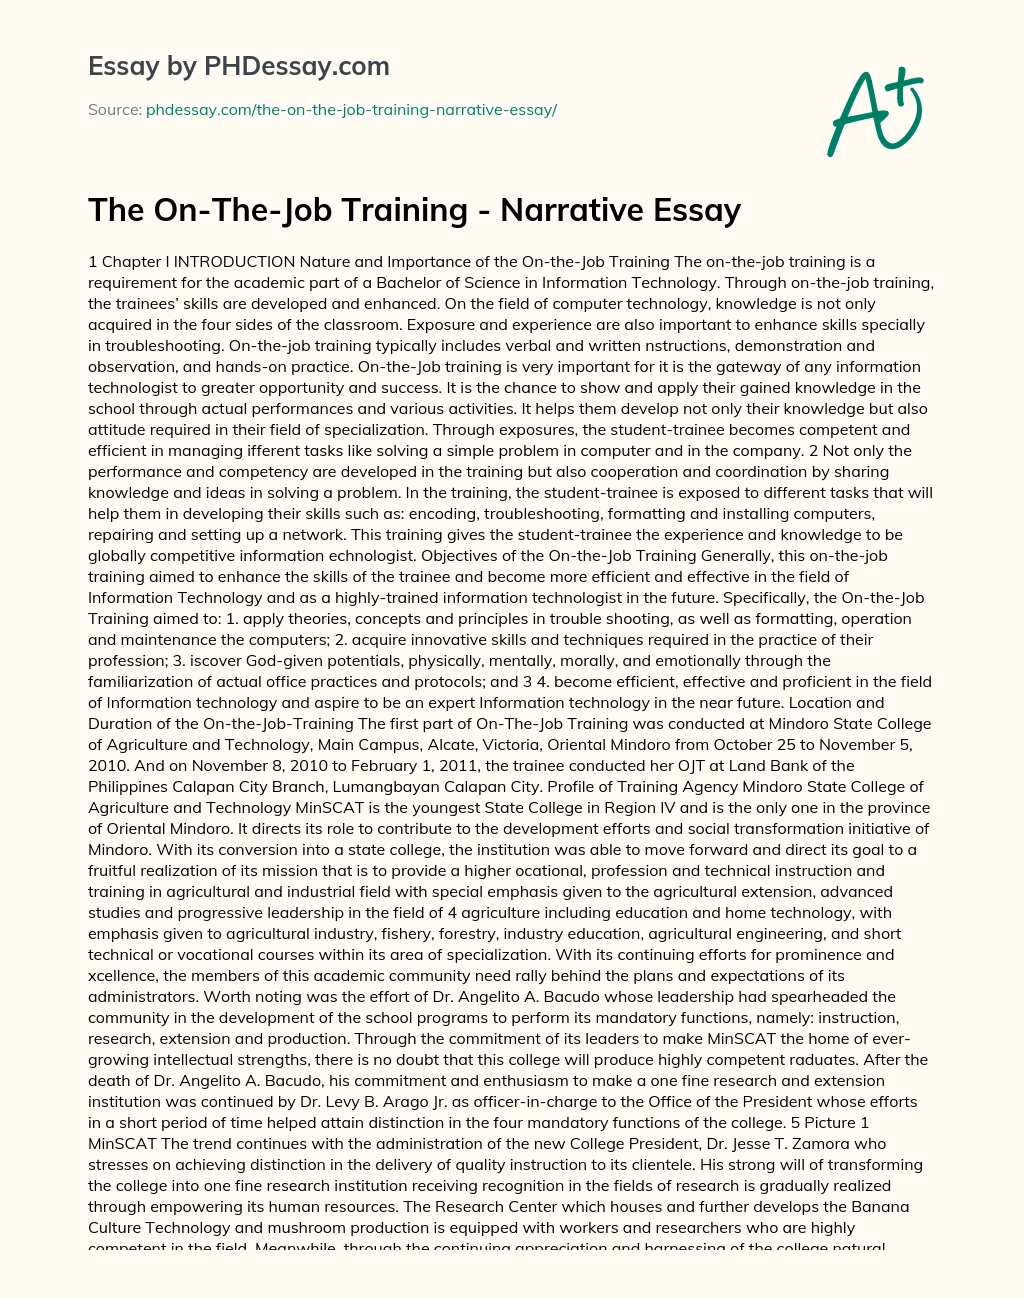 The On-The-Job Training – Narrative Essay essay